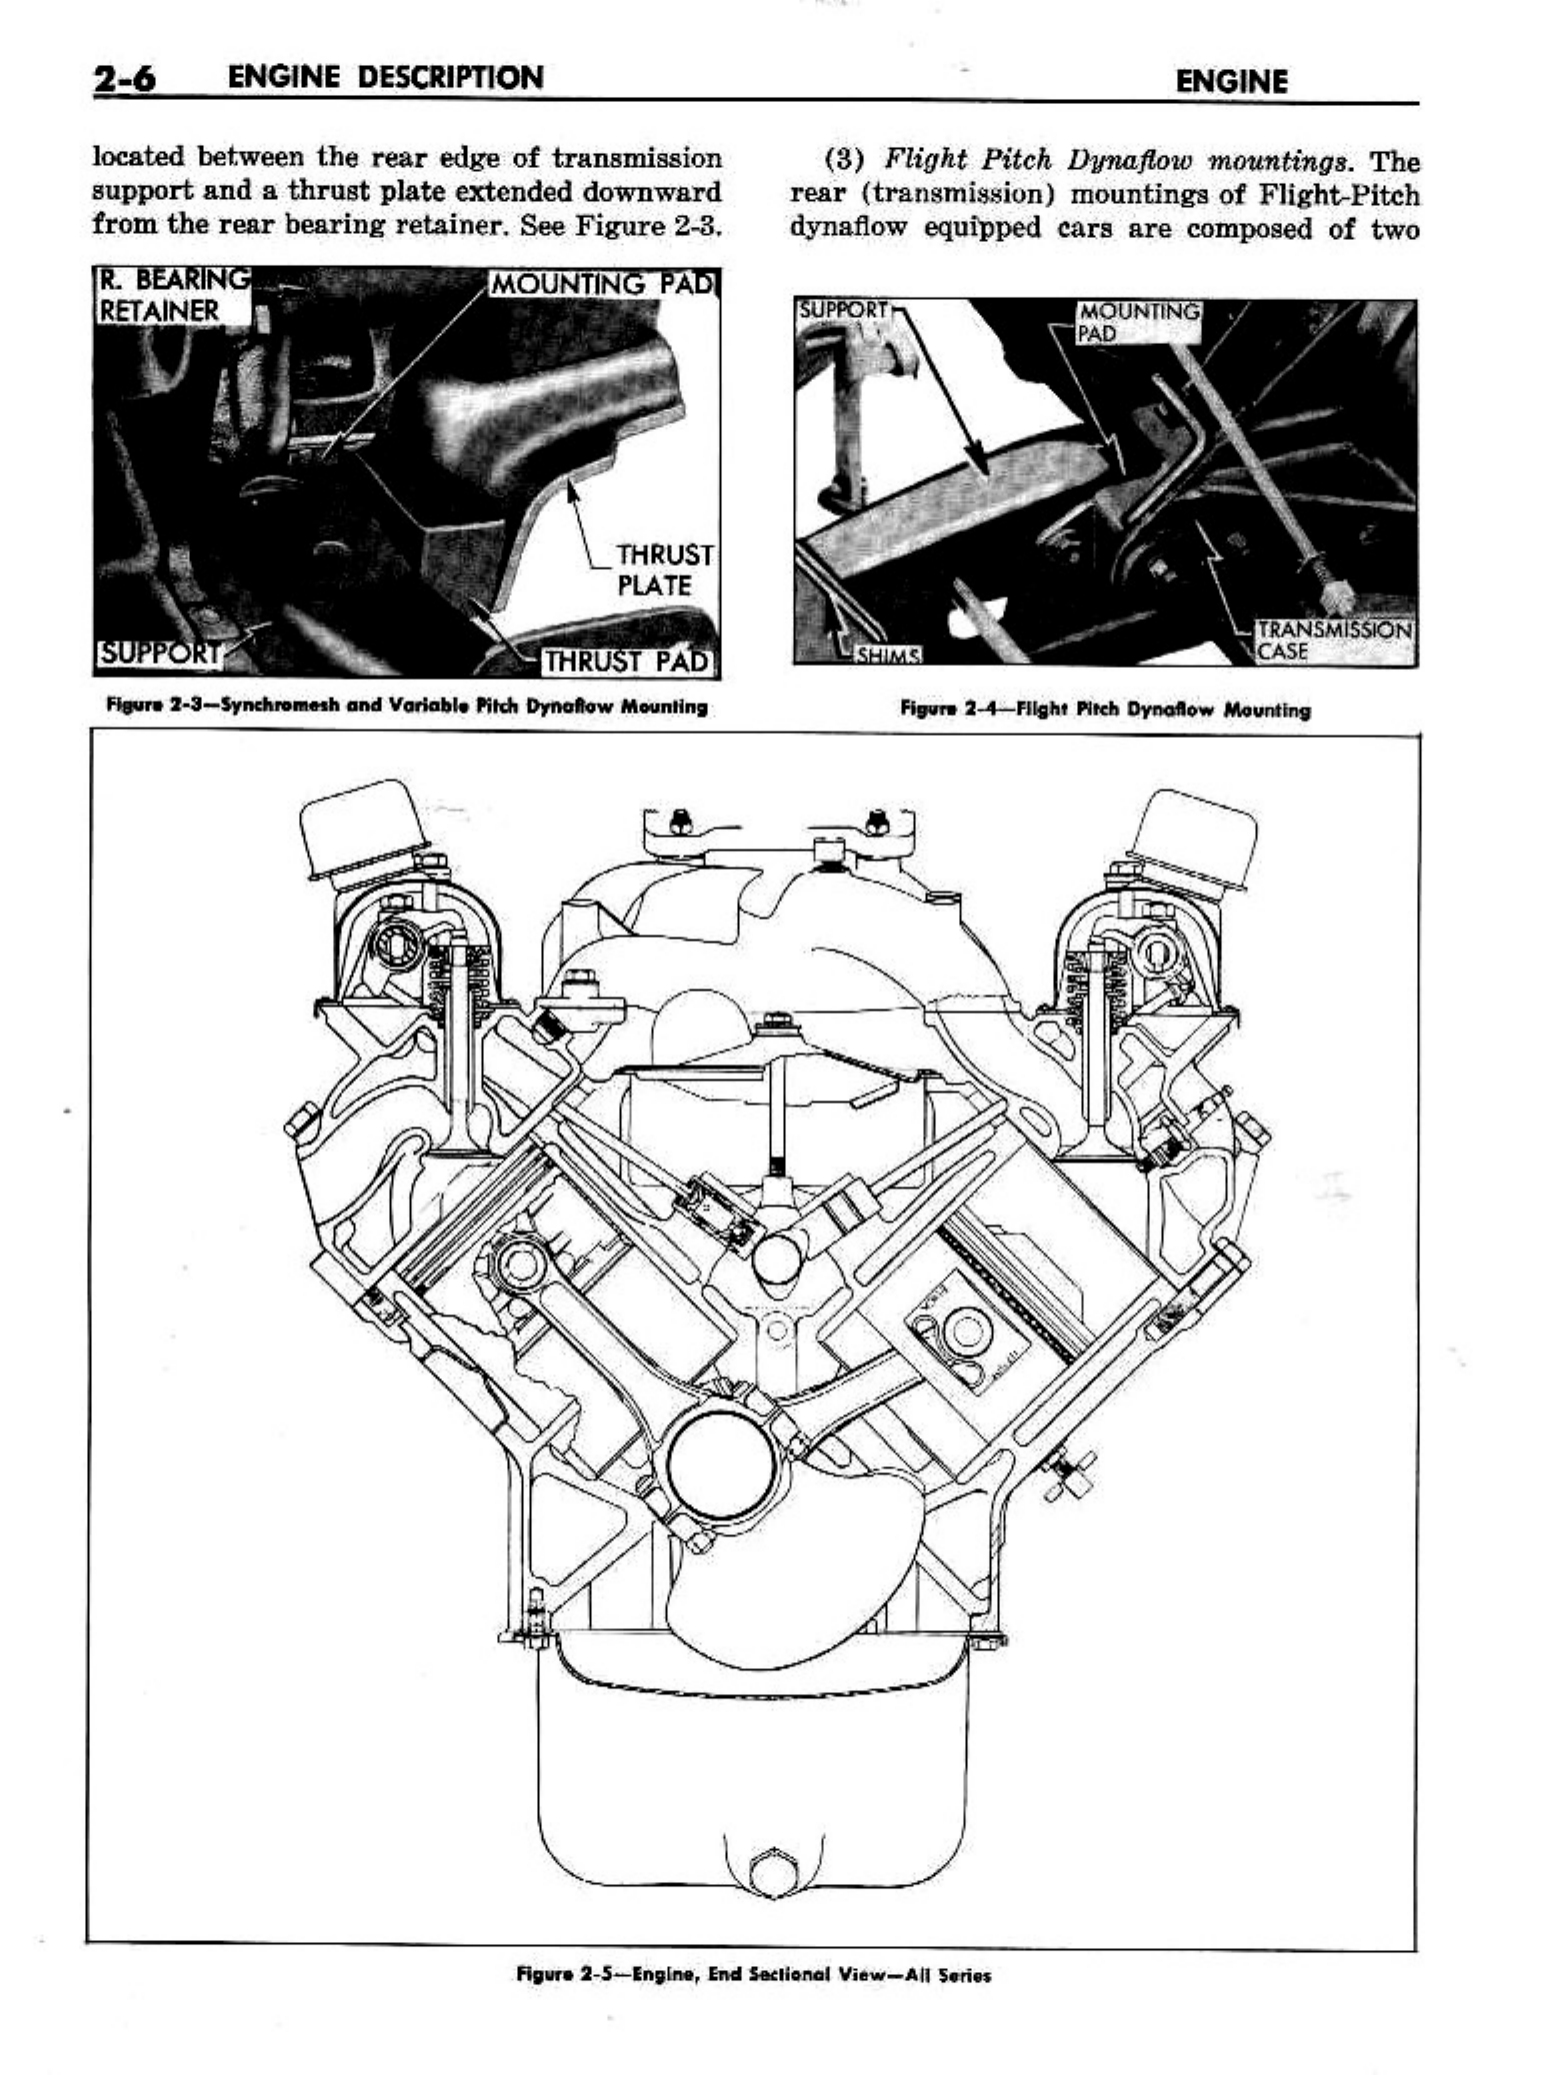 n_03 1958 Buick Shop Manual - Engine_6.jpg